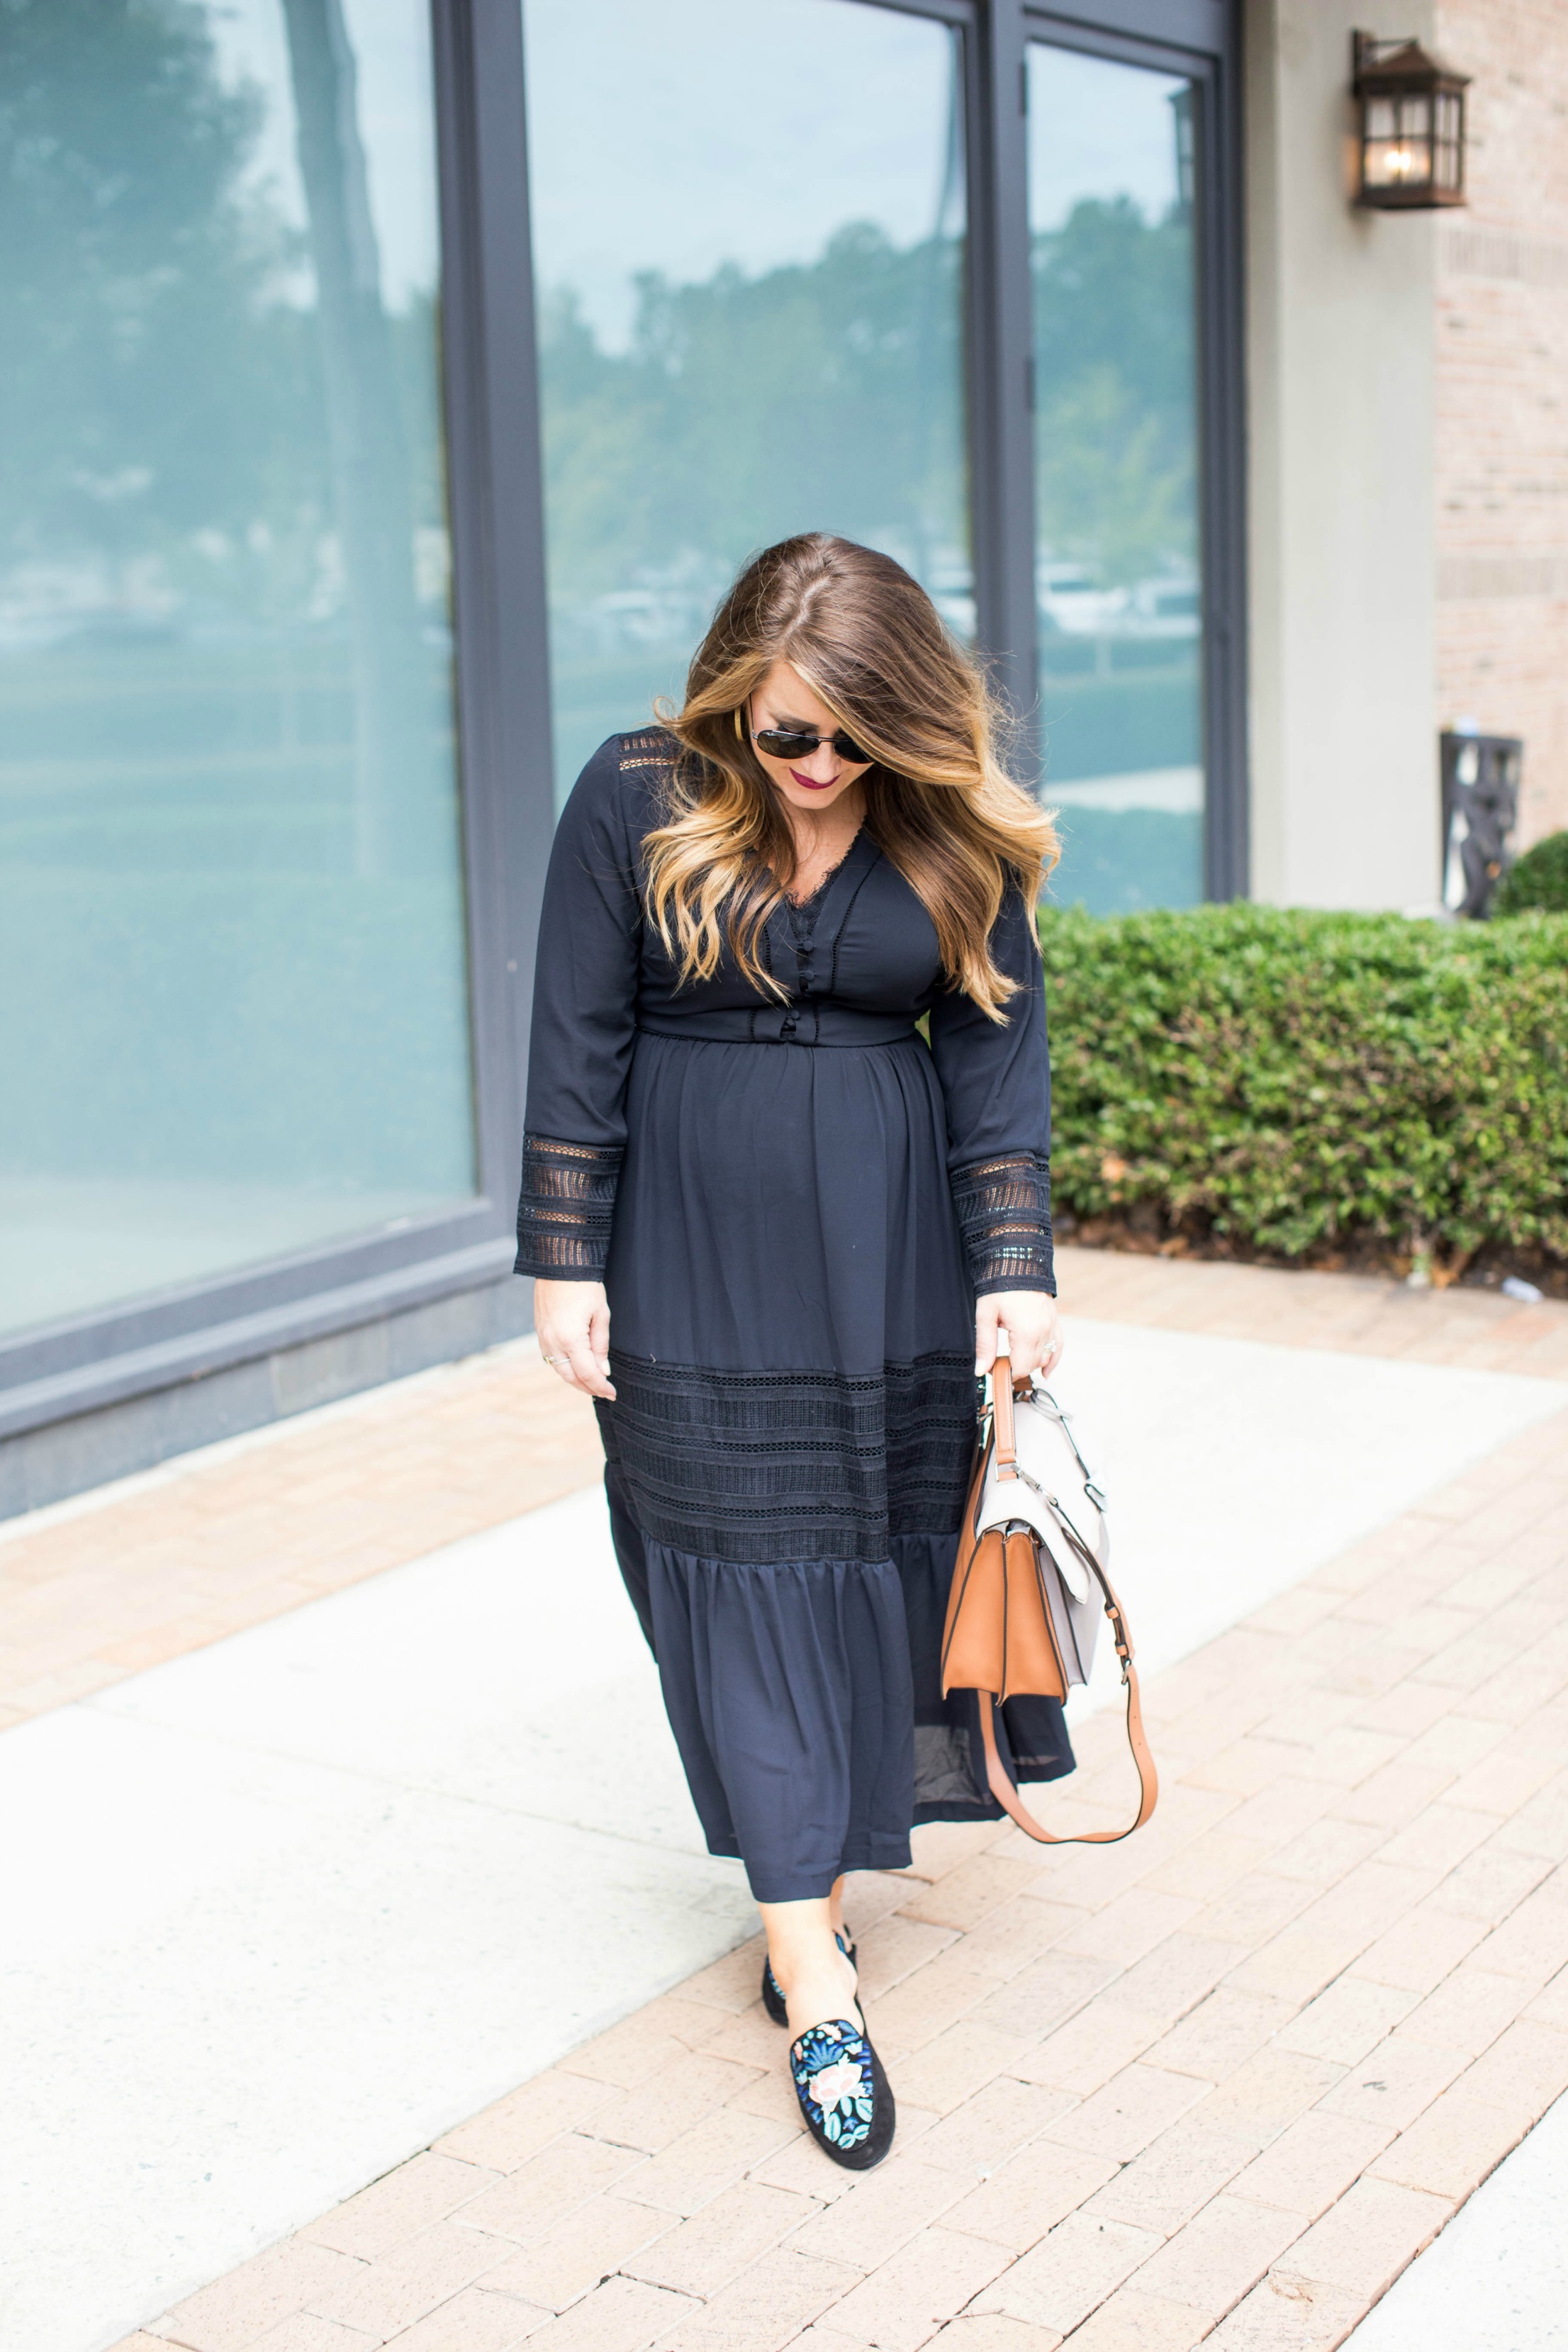 Midi Dress Two Ways - Black Midi Dress Two Ways by North Carolina fashion blogger Coffee Beans and Bobby Pins